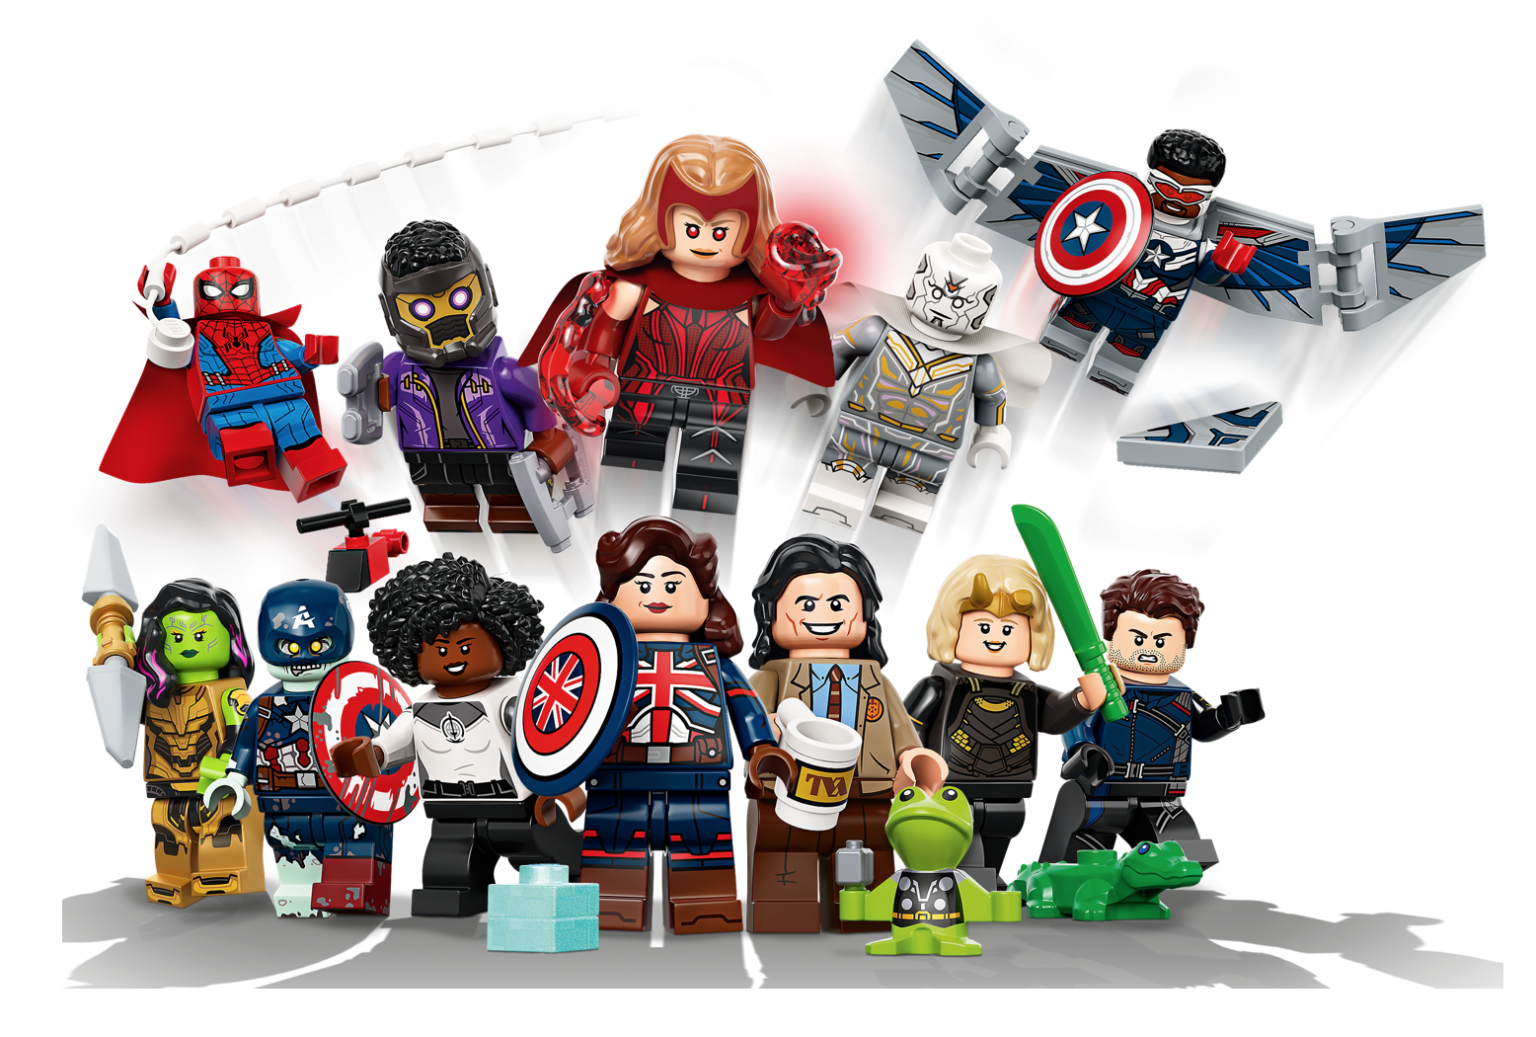 Behold the LEGO Avengers Advent Calendar!